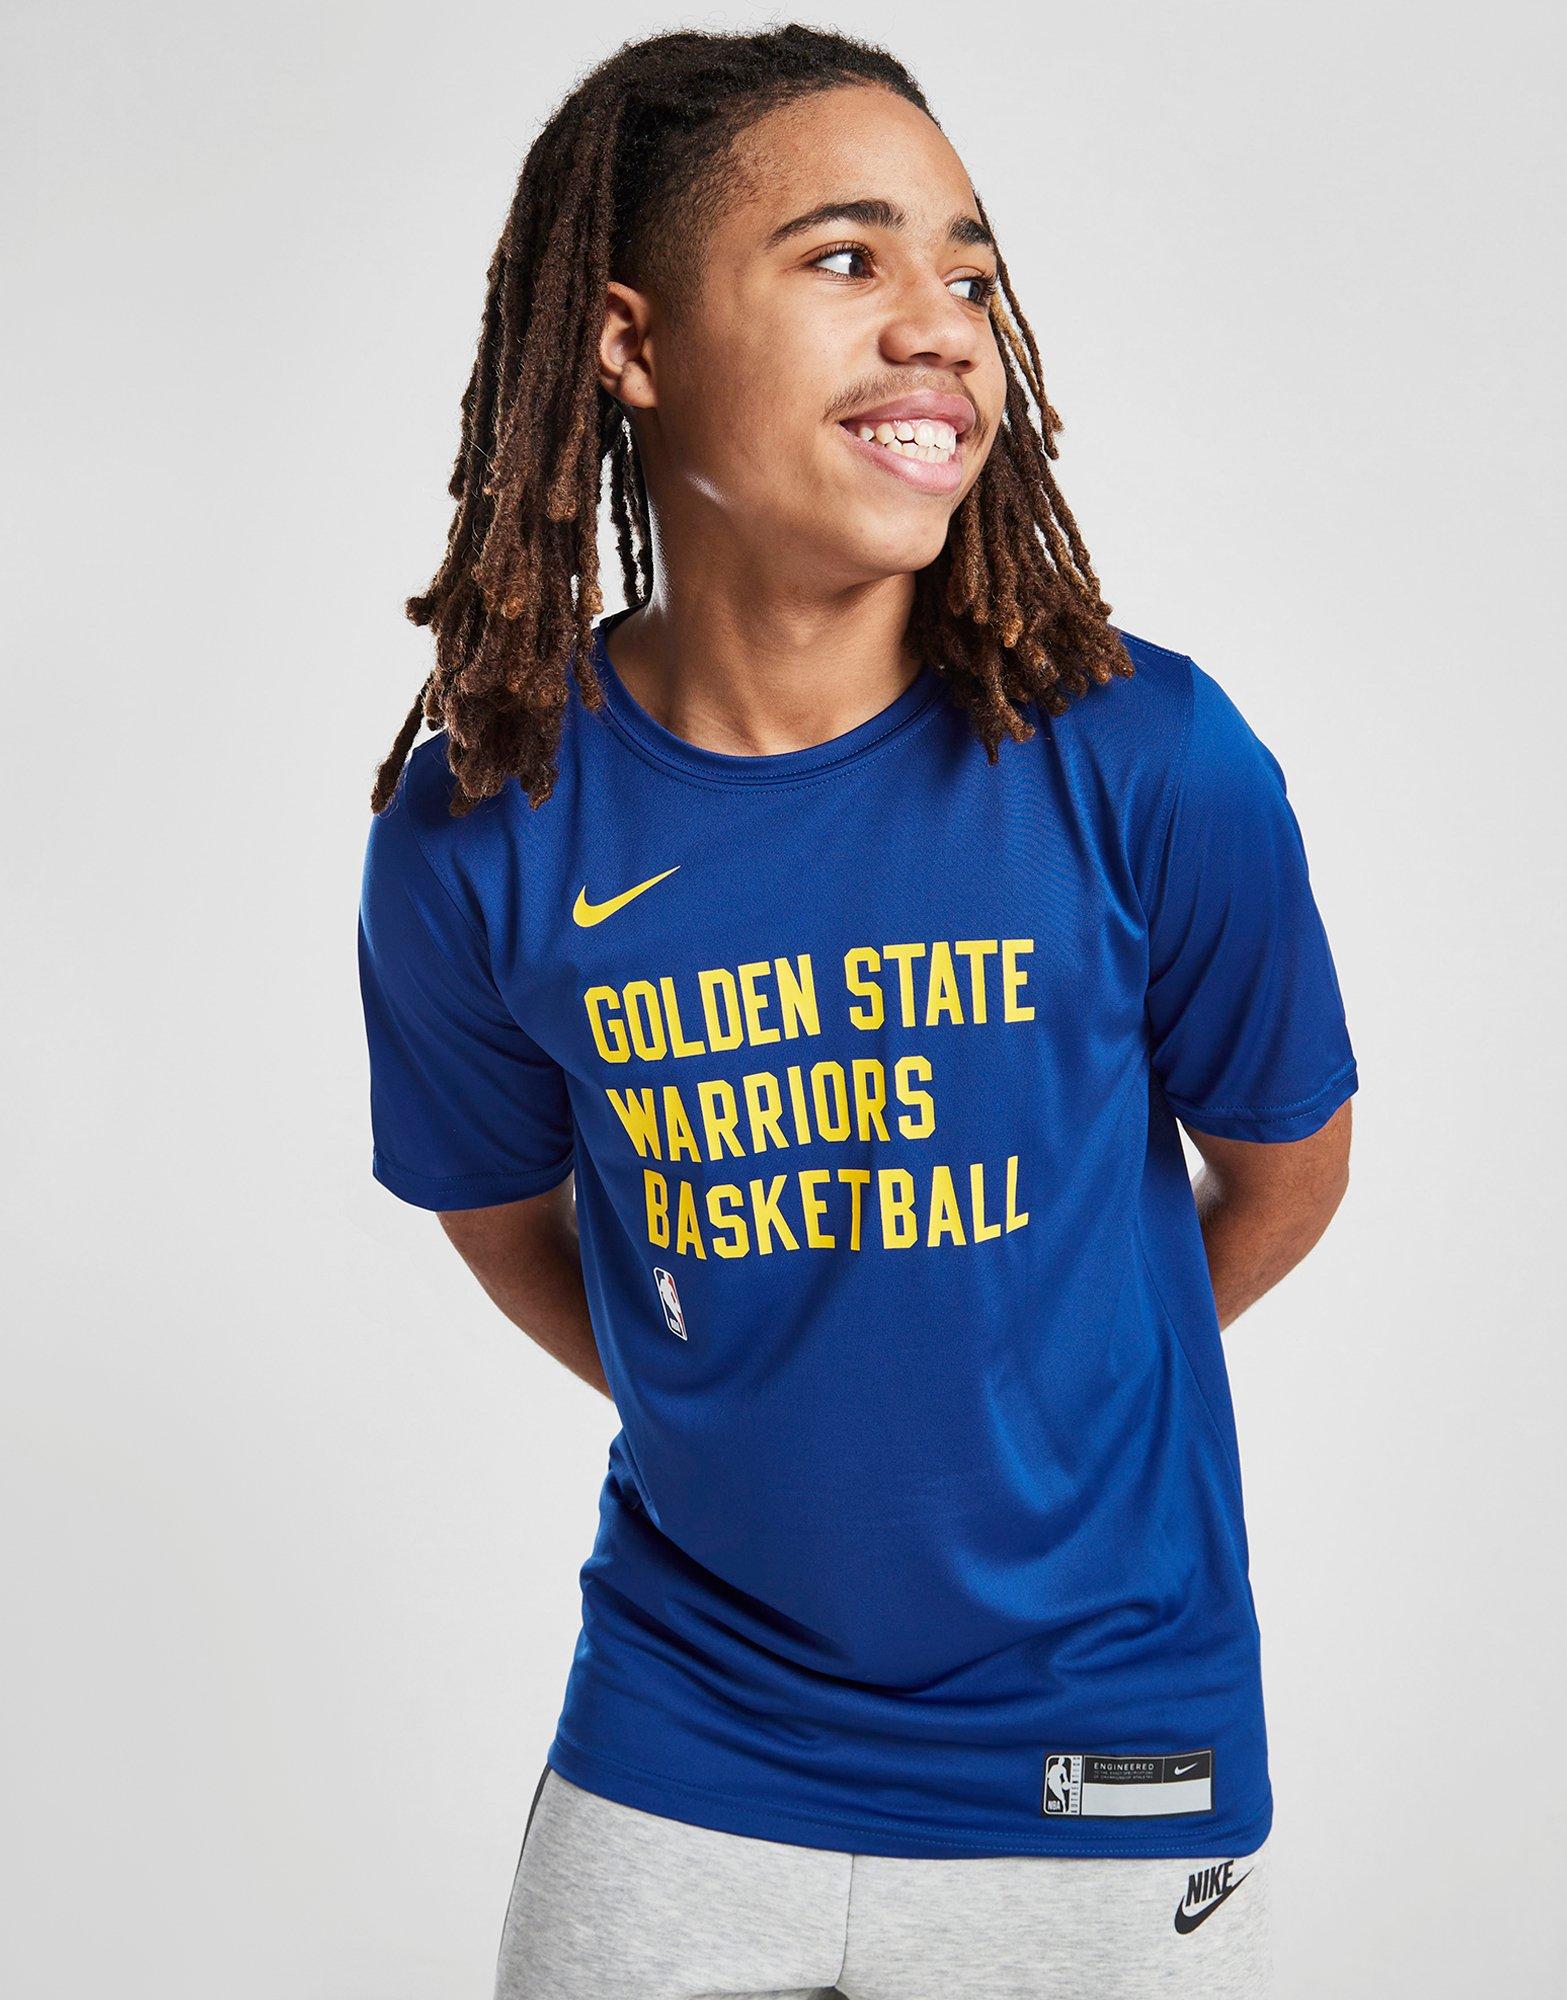 Nike T-shirt Mens Medium Golden State Warriors The Nike Tee Dri-Fit  Basketball